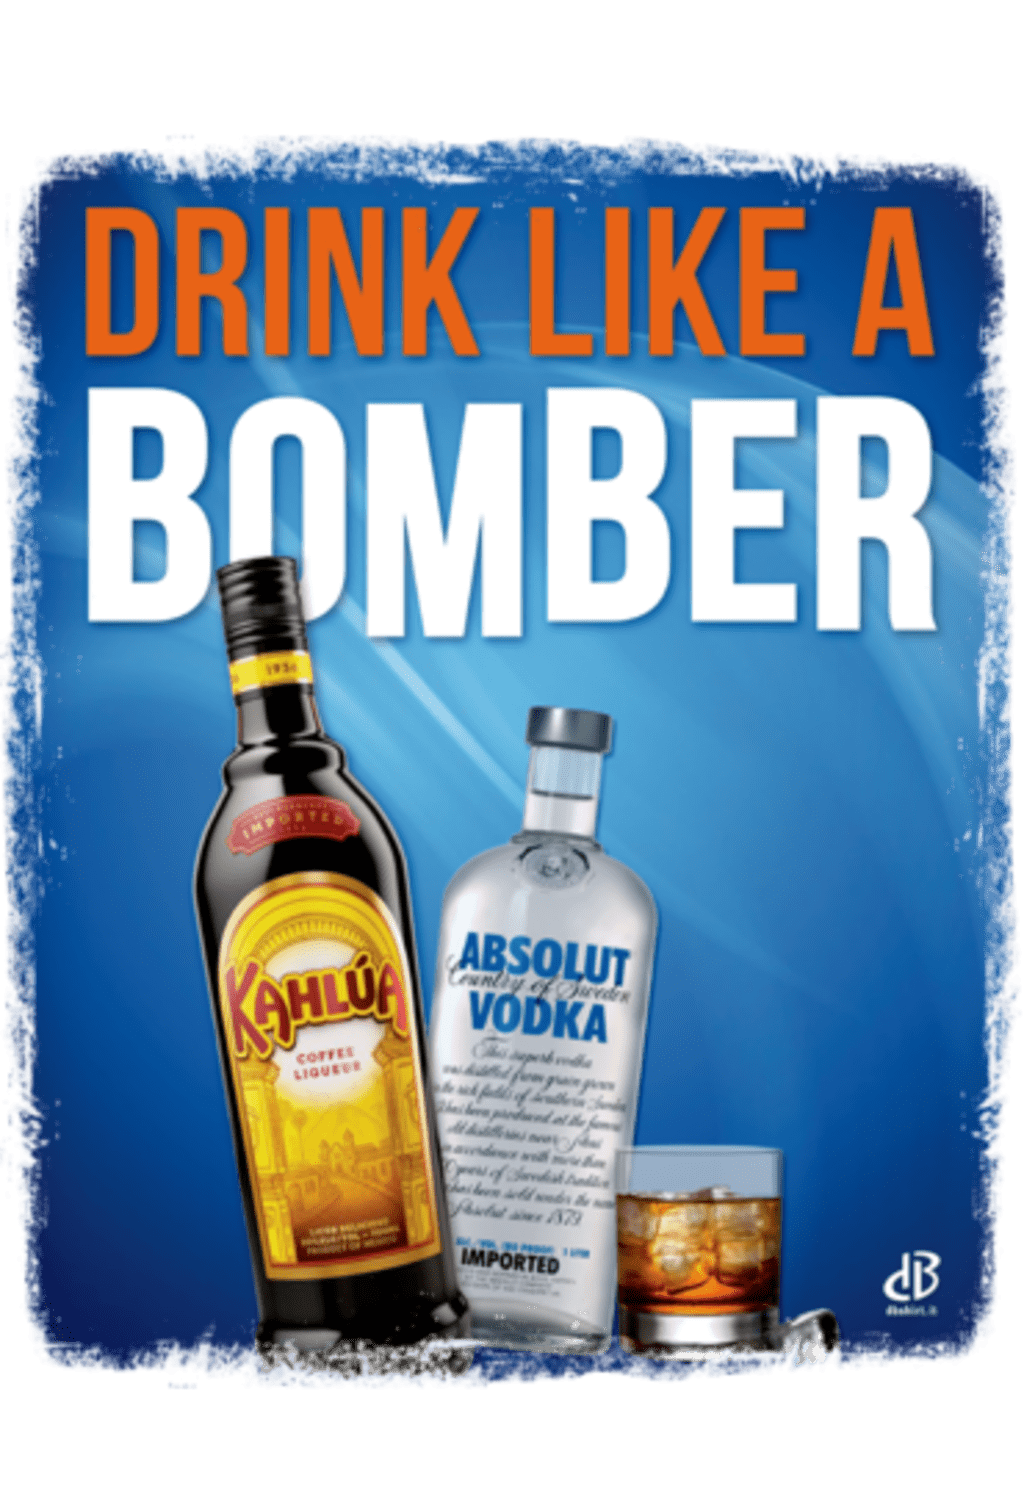 Drink like a bomber (black russian)